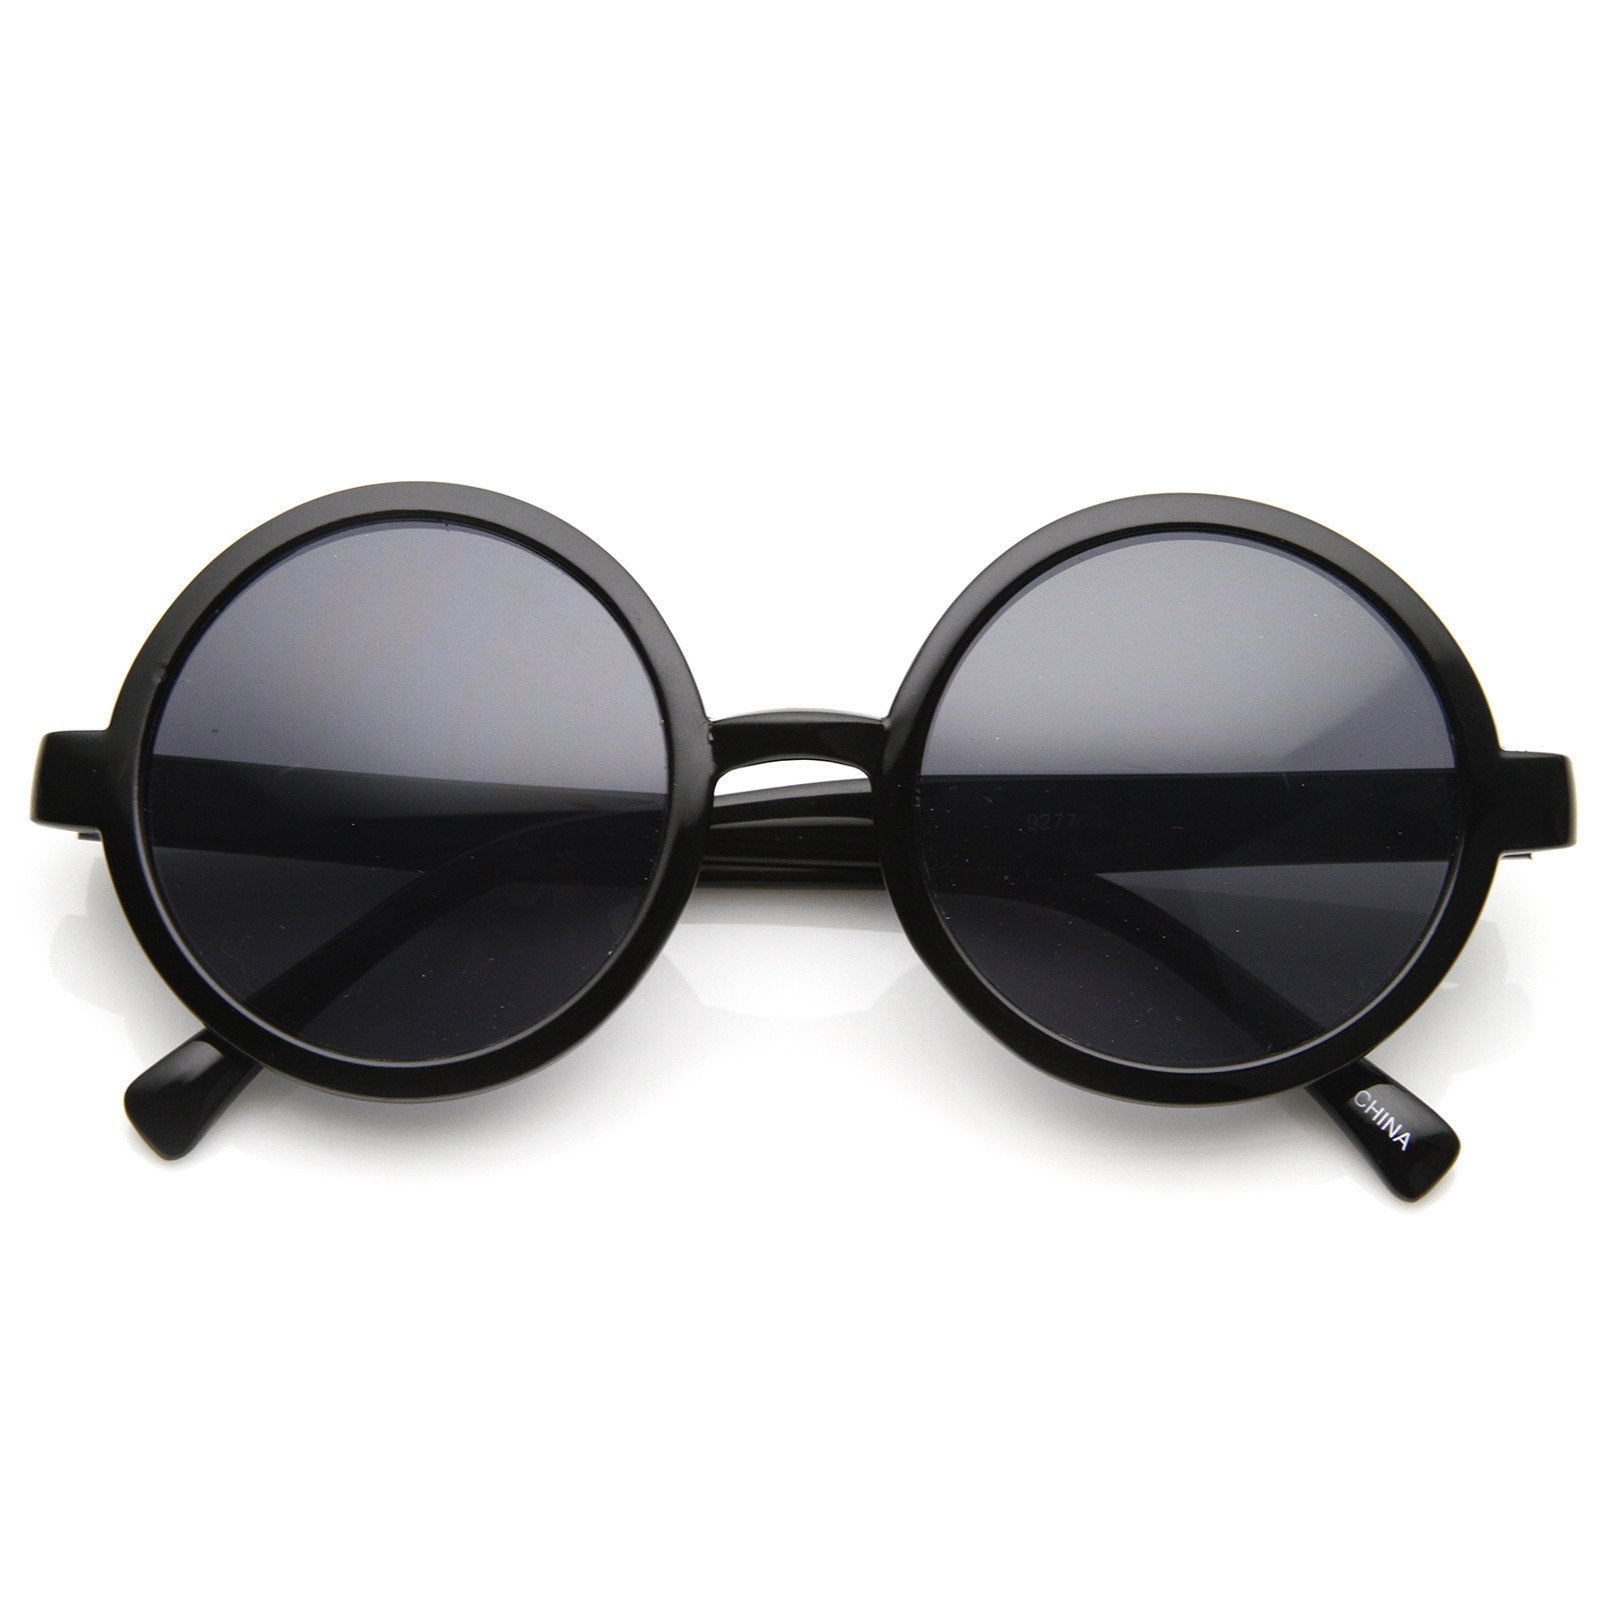 1980s Retro Round Sunglasses Fashion Sunglasses Zerouv 